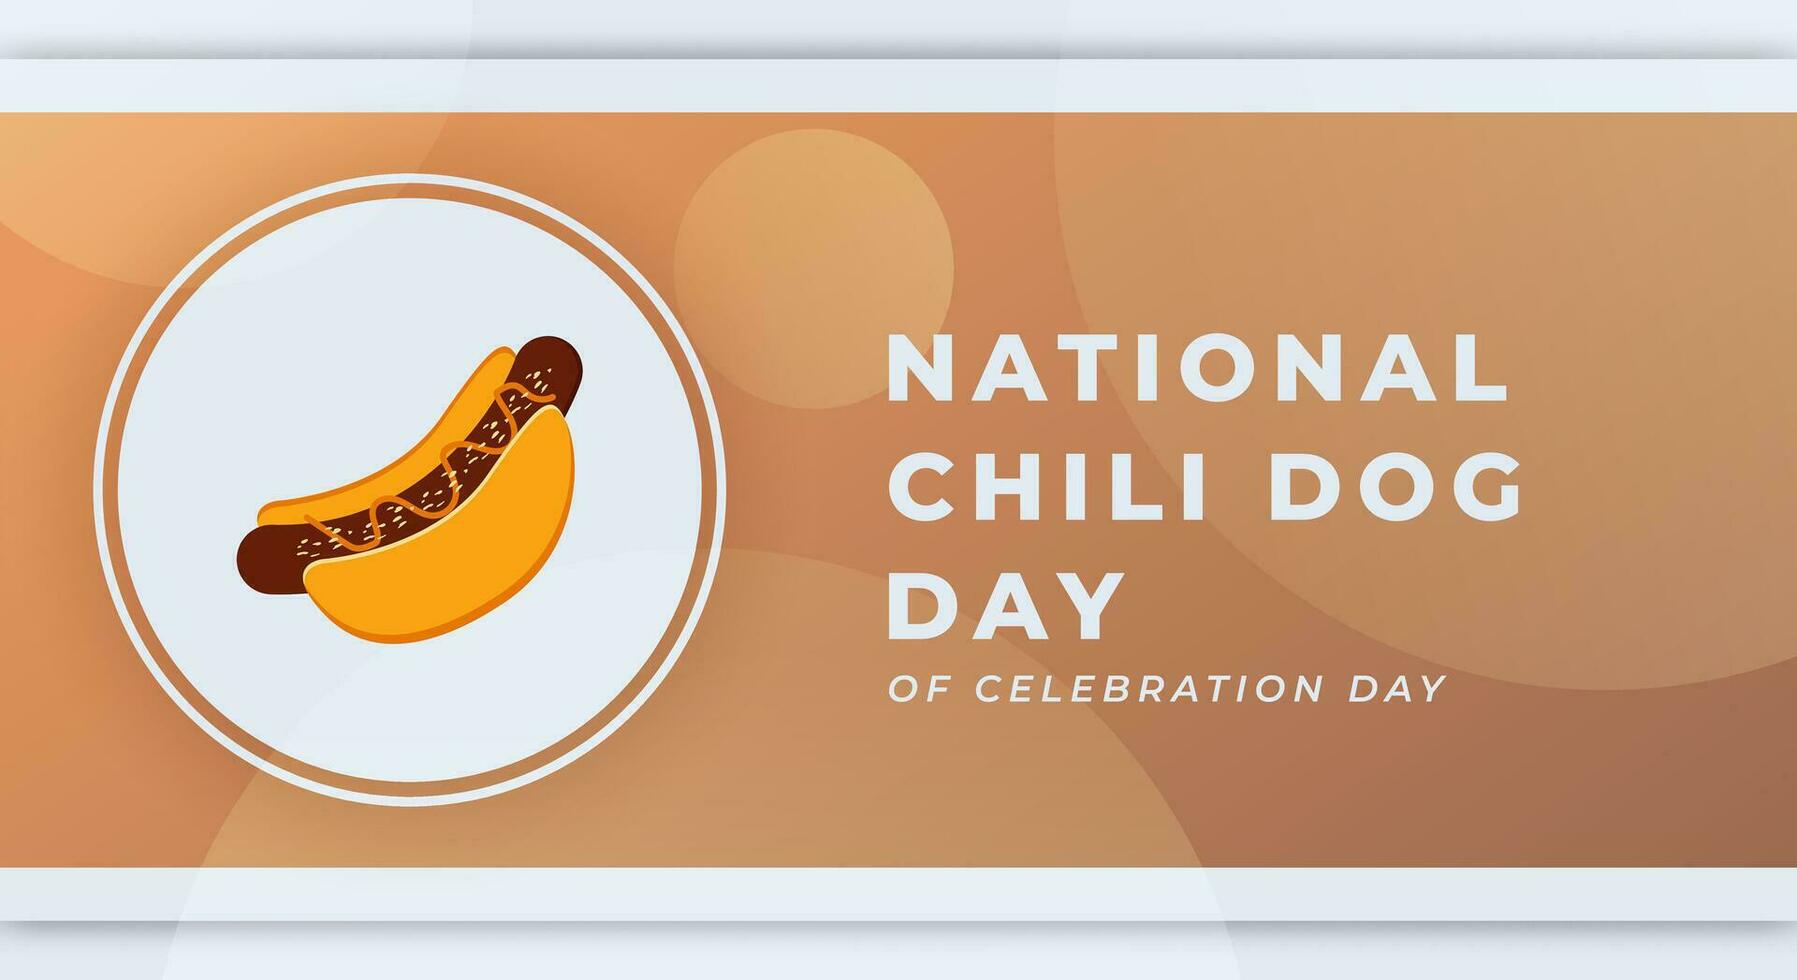 National Chili Dog Day Celebration Vector Design Illustration for Background, Poster, Banner, Advertising, Greeting Card